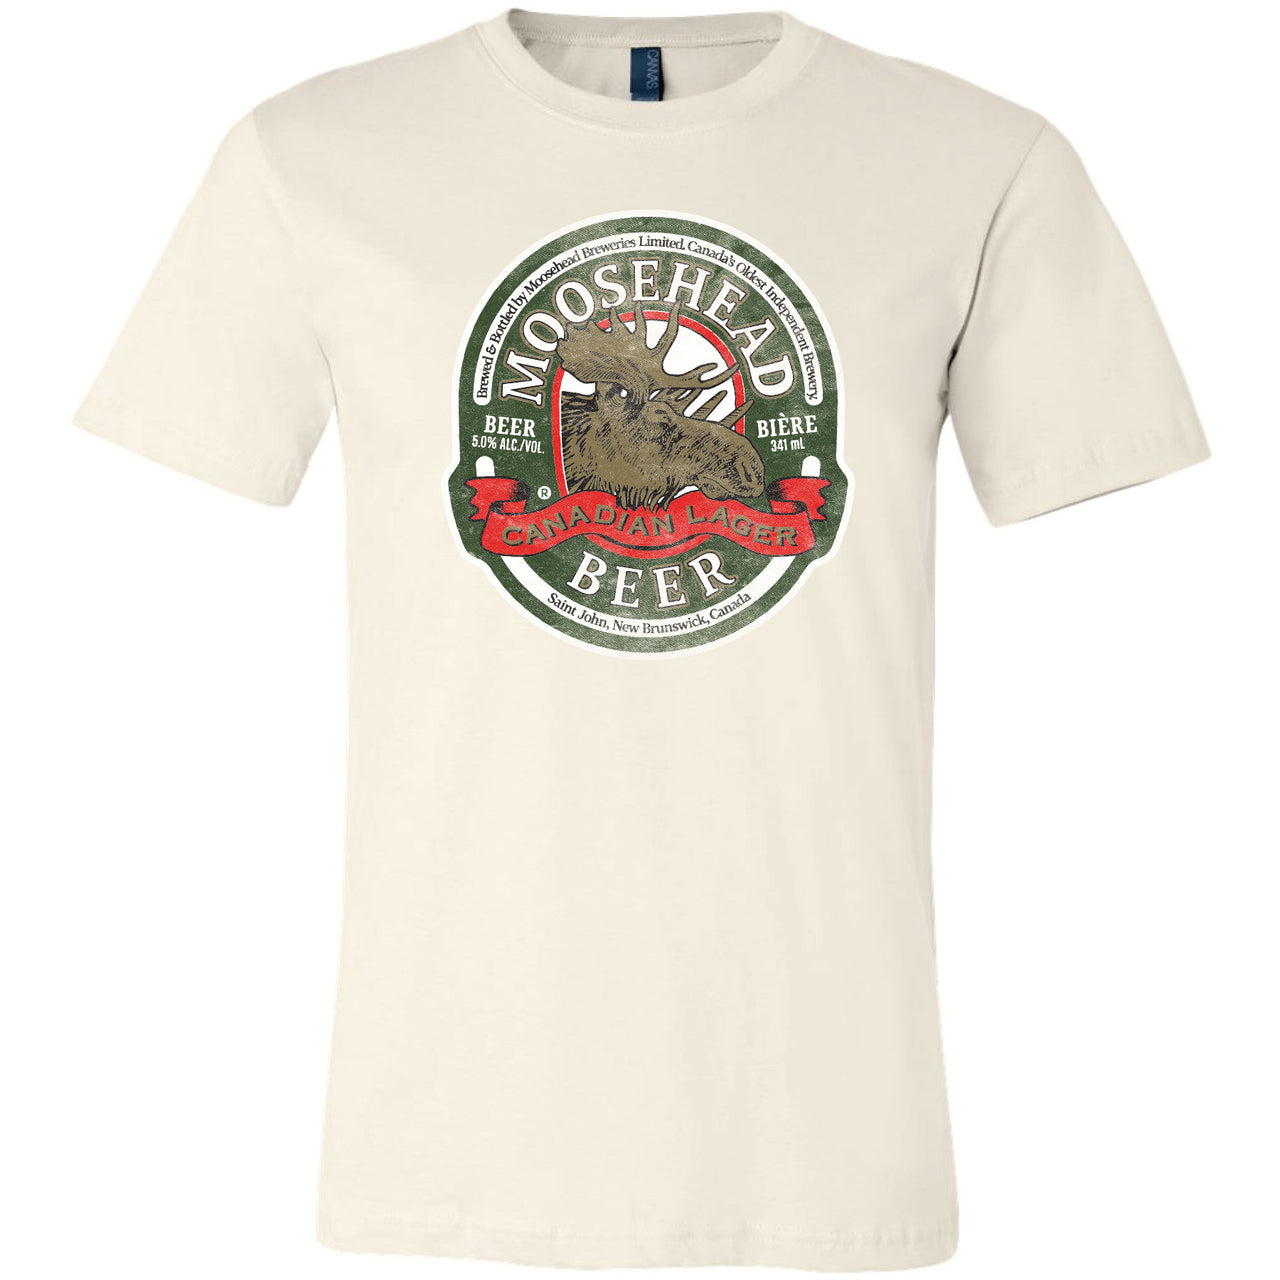 Moosehead Lager - Vintage Label T-shirt